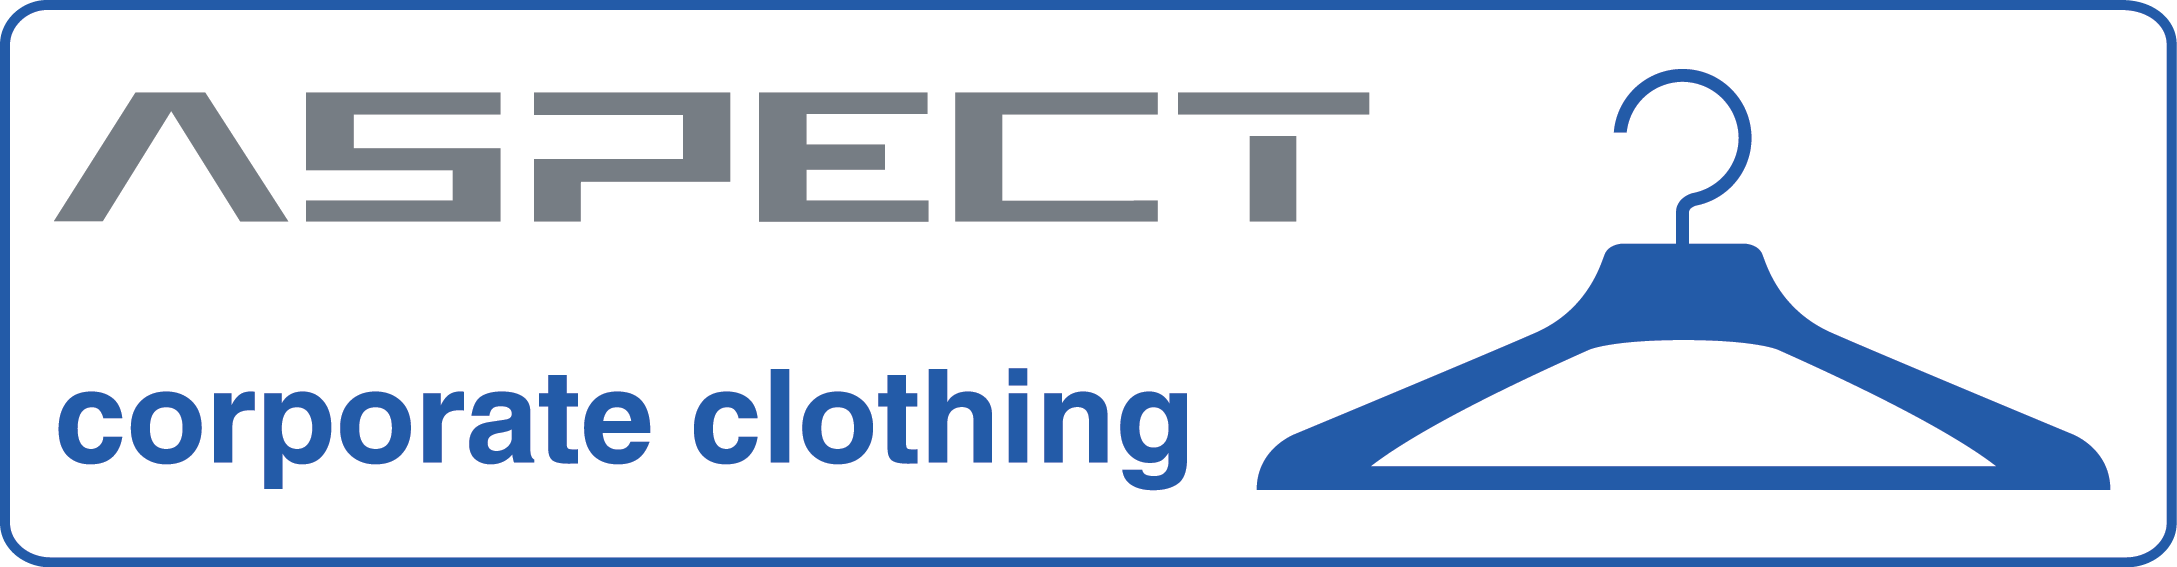 Aspect Corporate Clothing Ltd